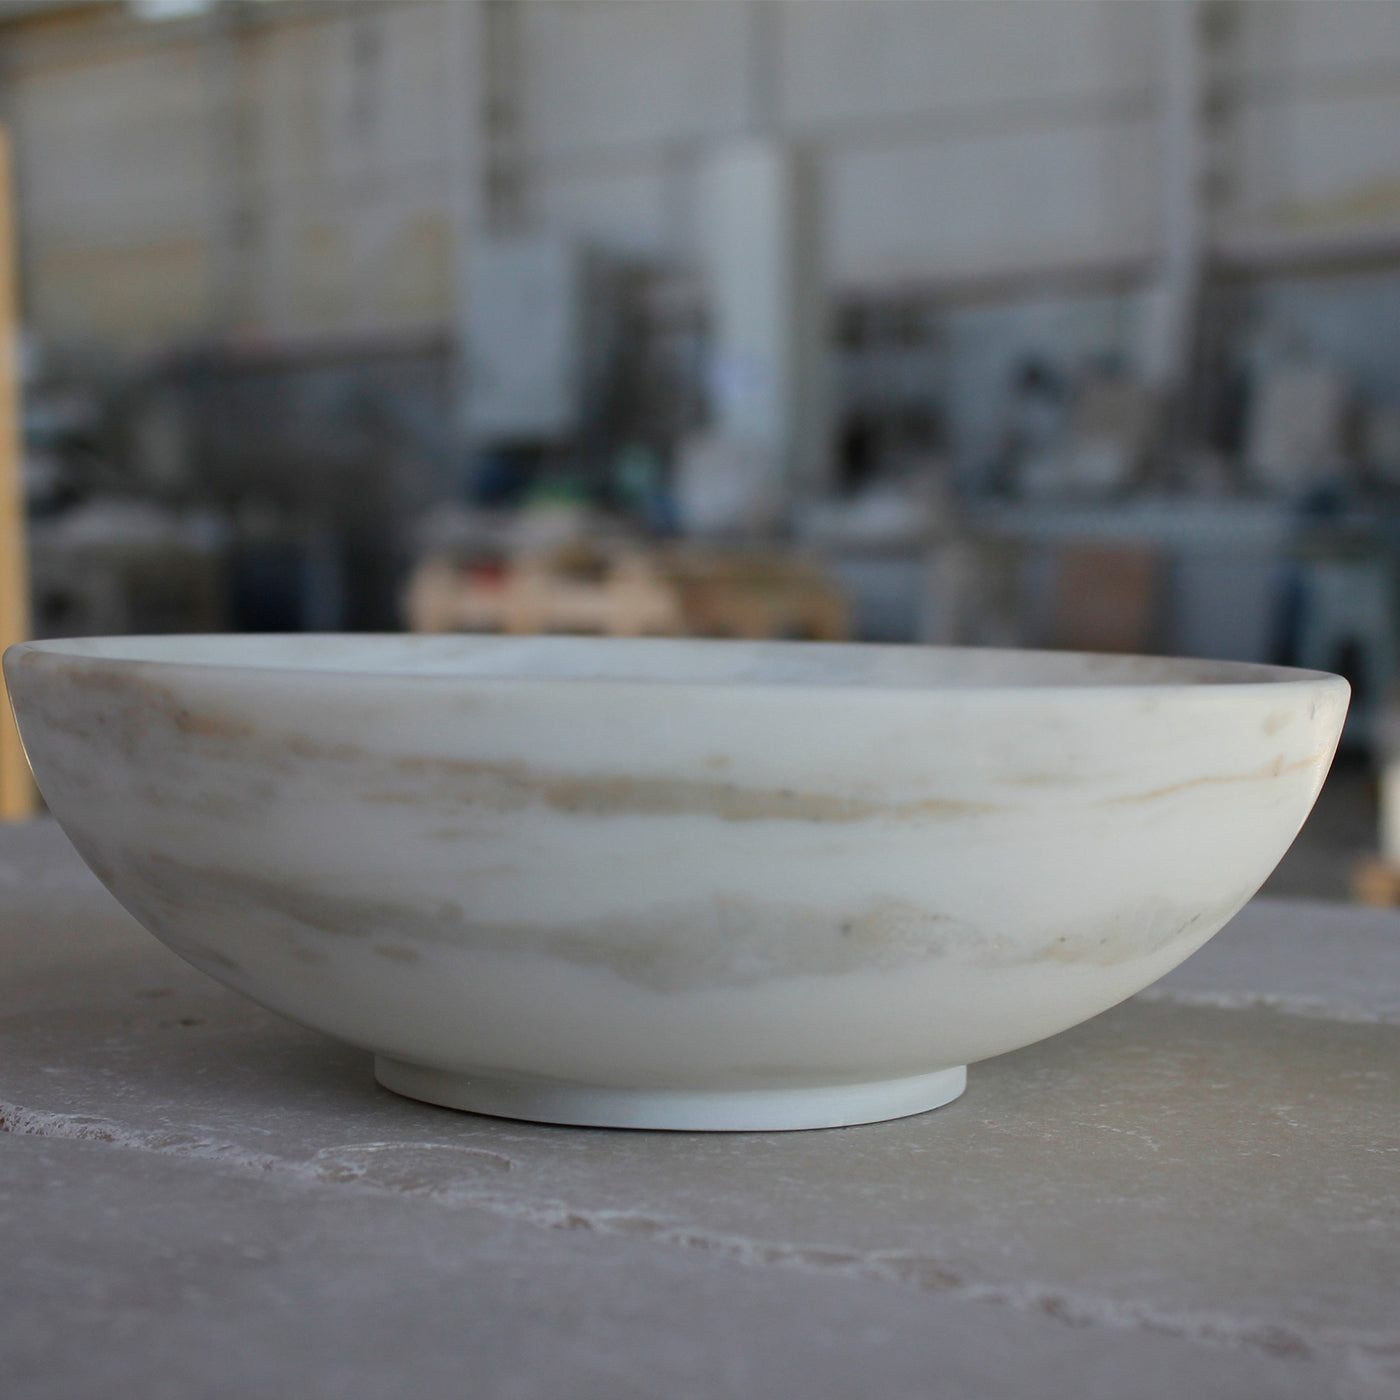 Calacatta Decorative Bowl #2 - Alternative view 2